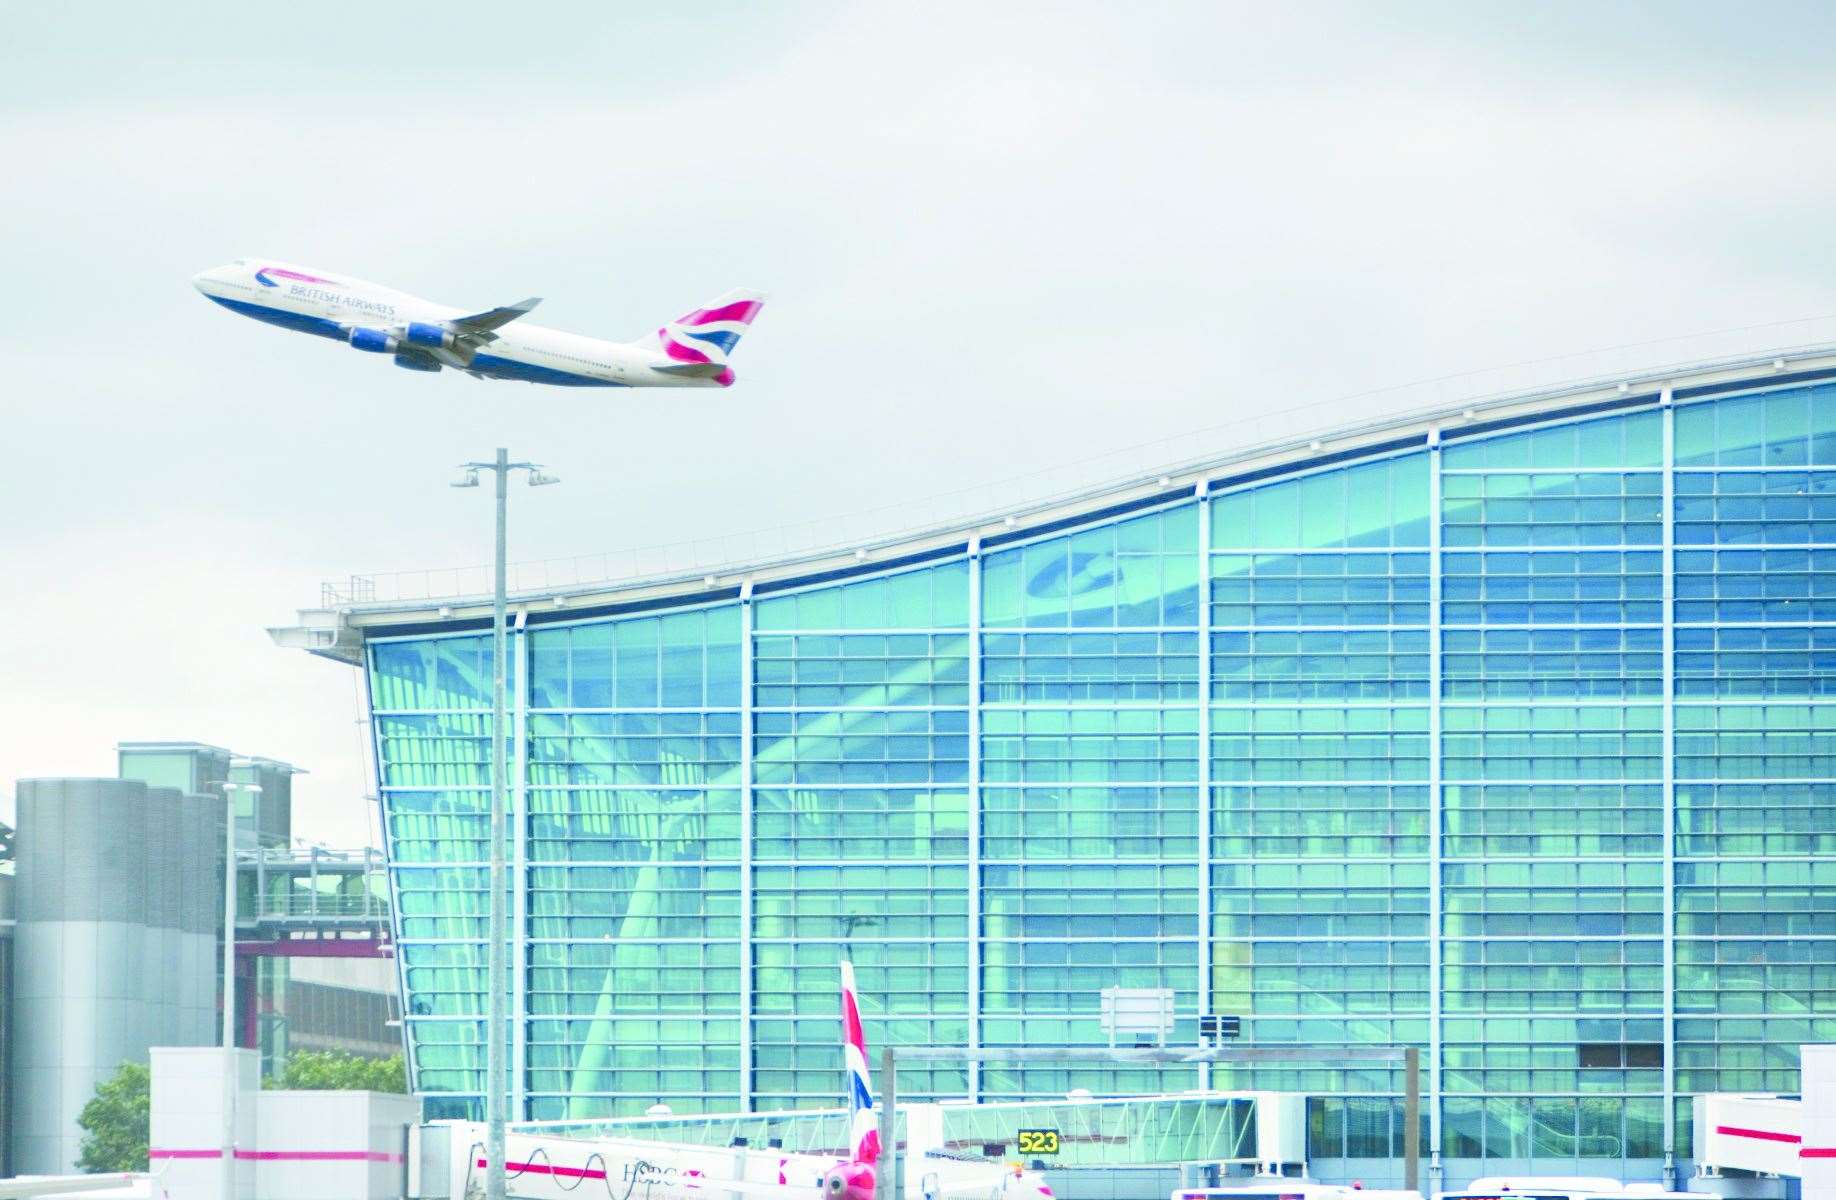 Heathrow Airport with a British Airways Boeing 747 taking off in background.